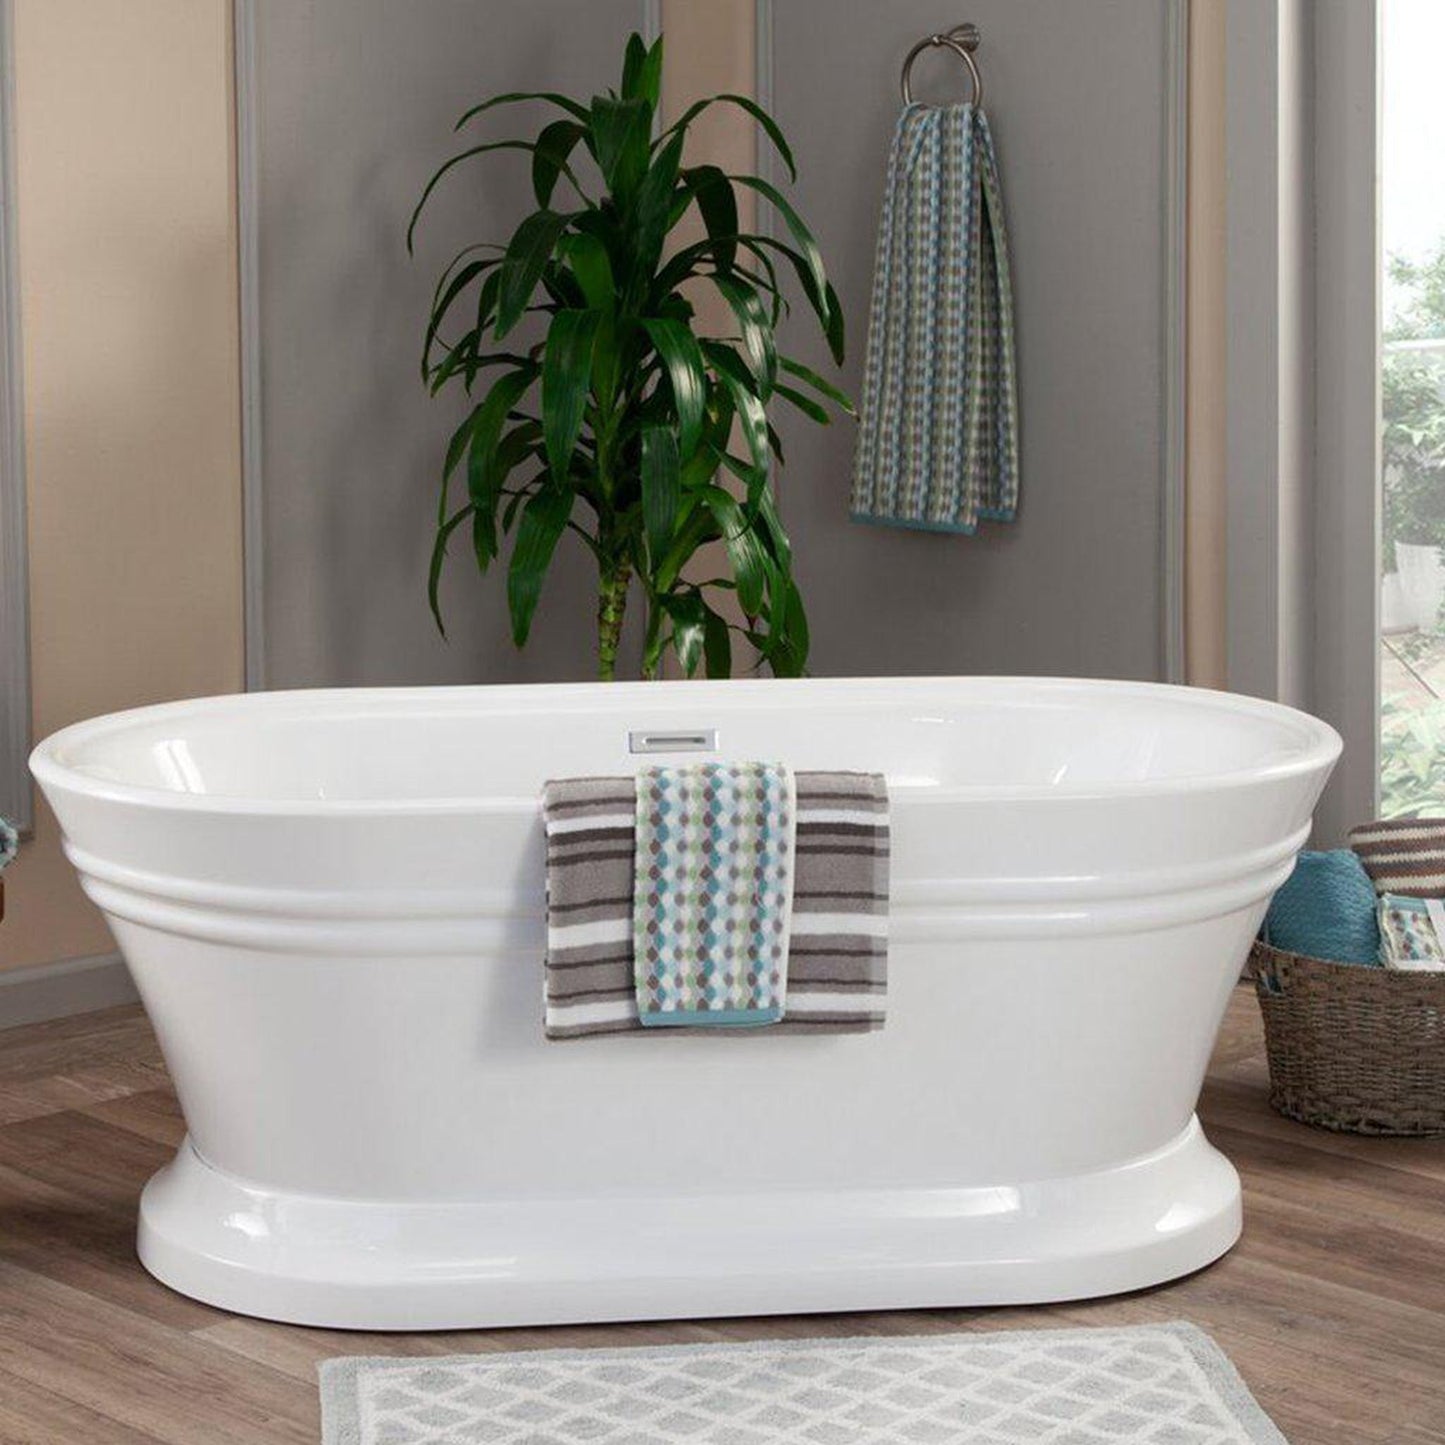 Altair Solace 59" x 30" White Acrylic Freestanding Bathtub